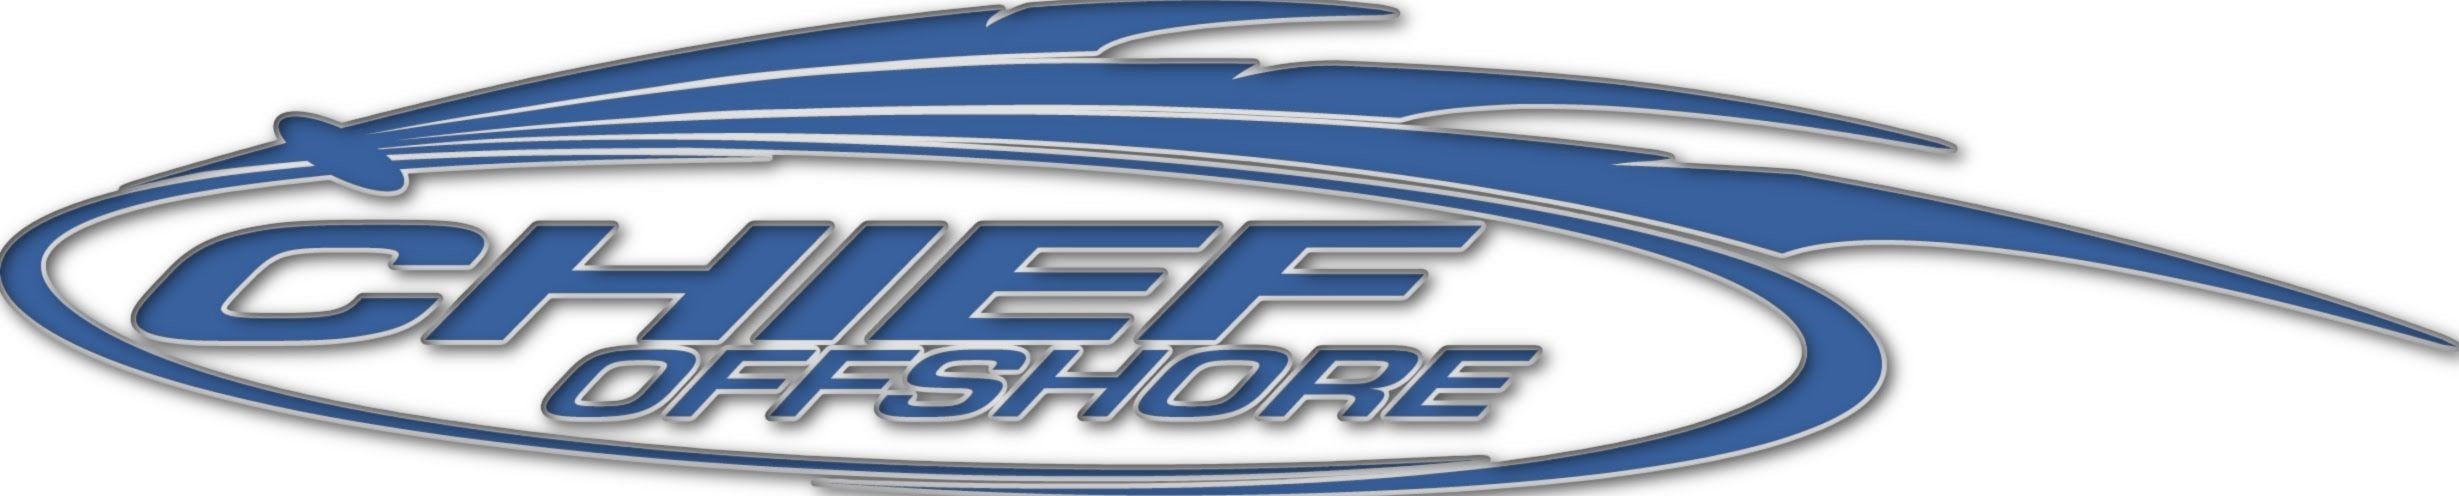 chief offshore blue logo.jpg